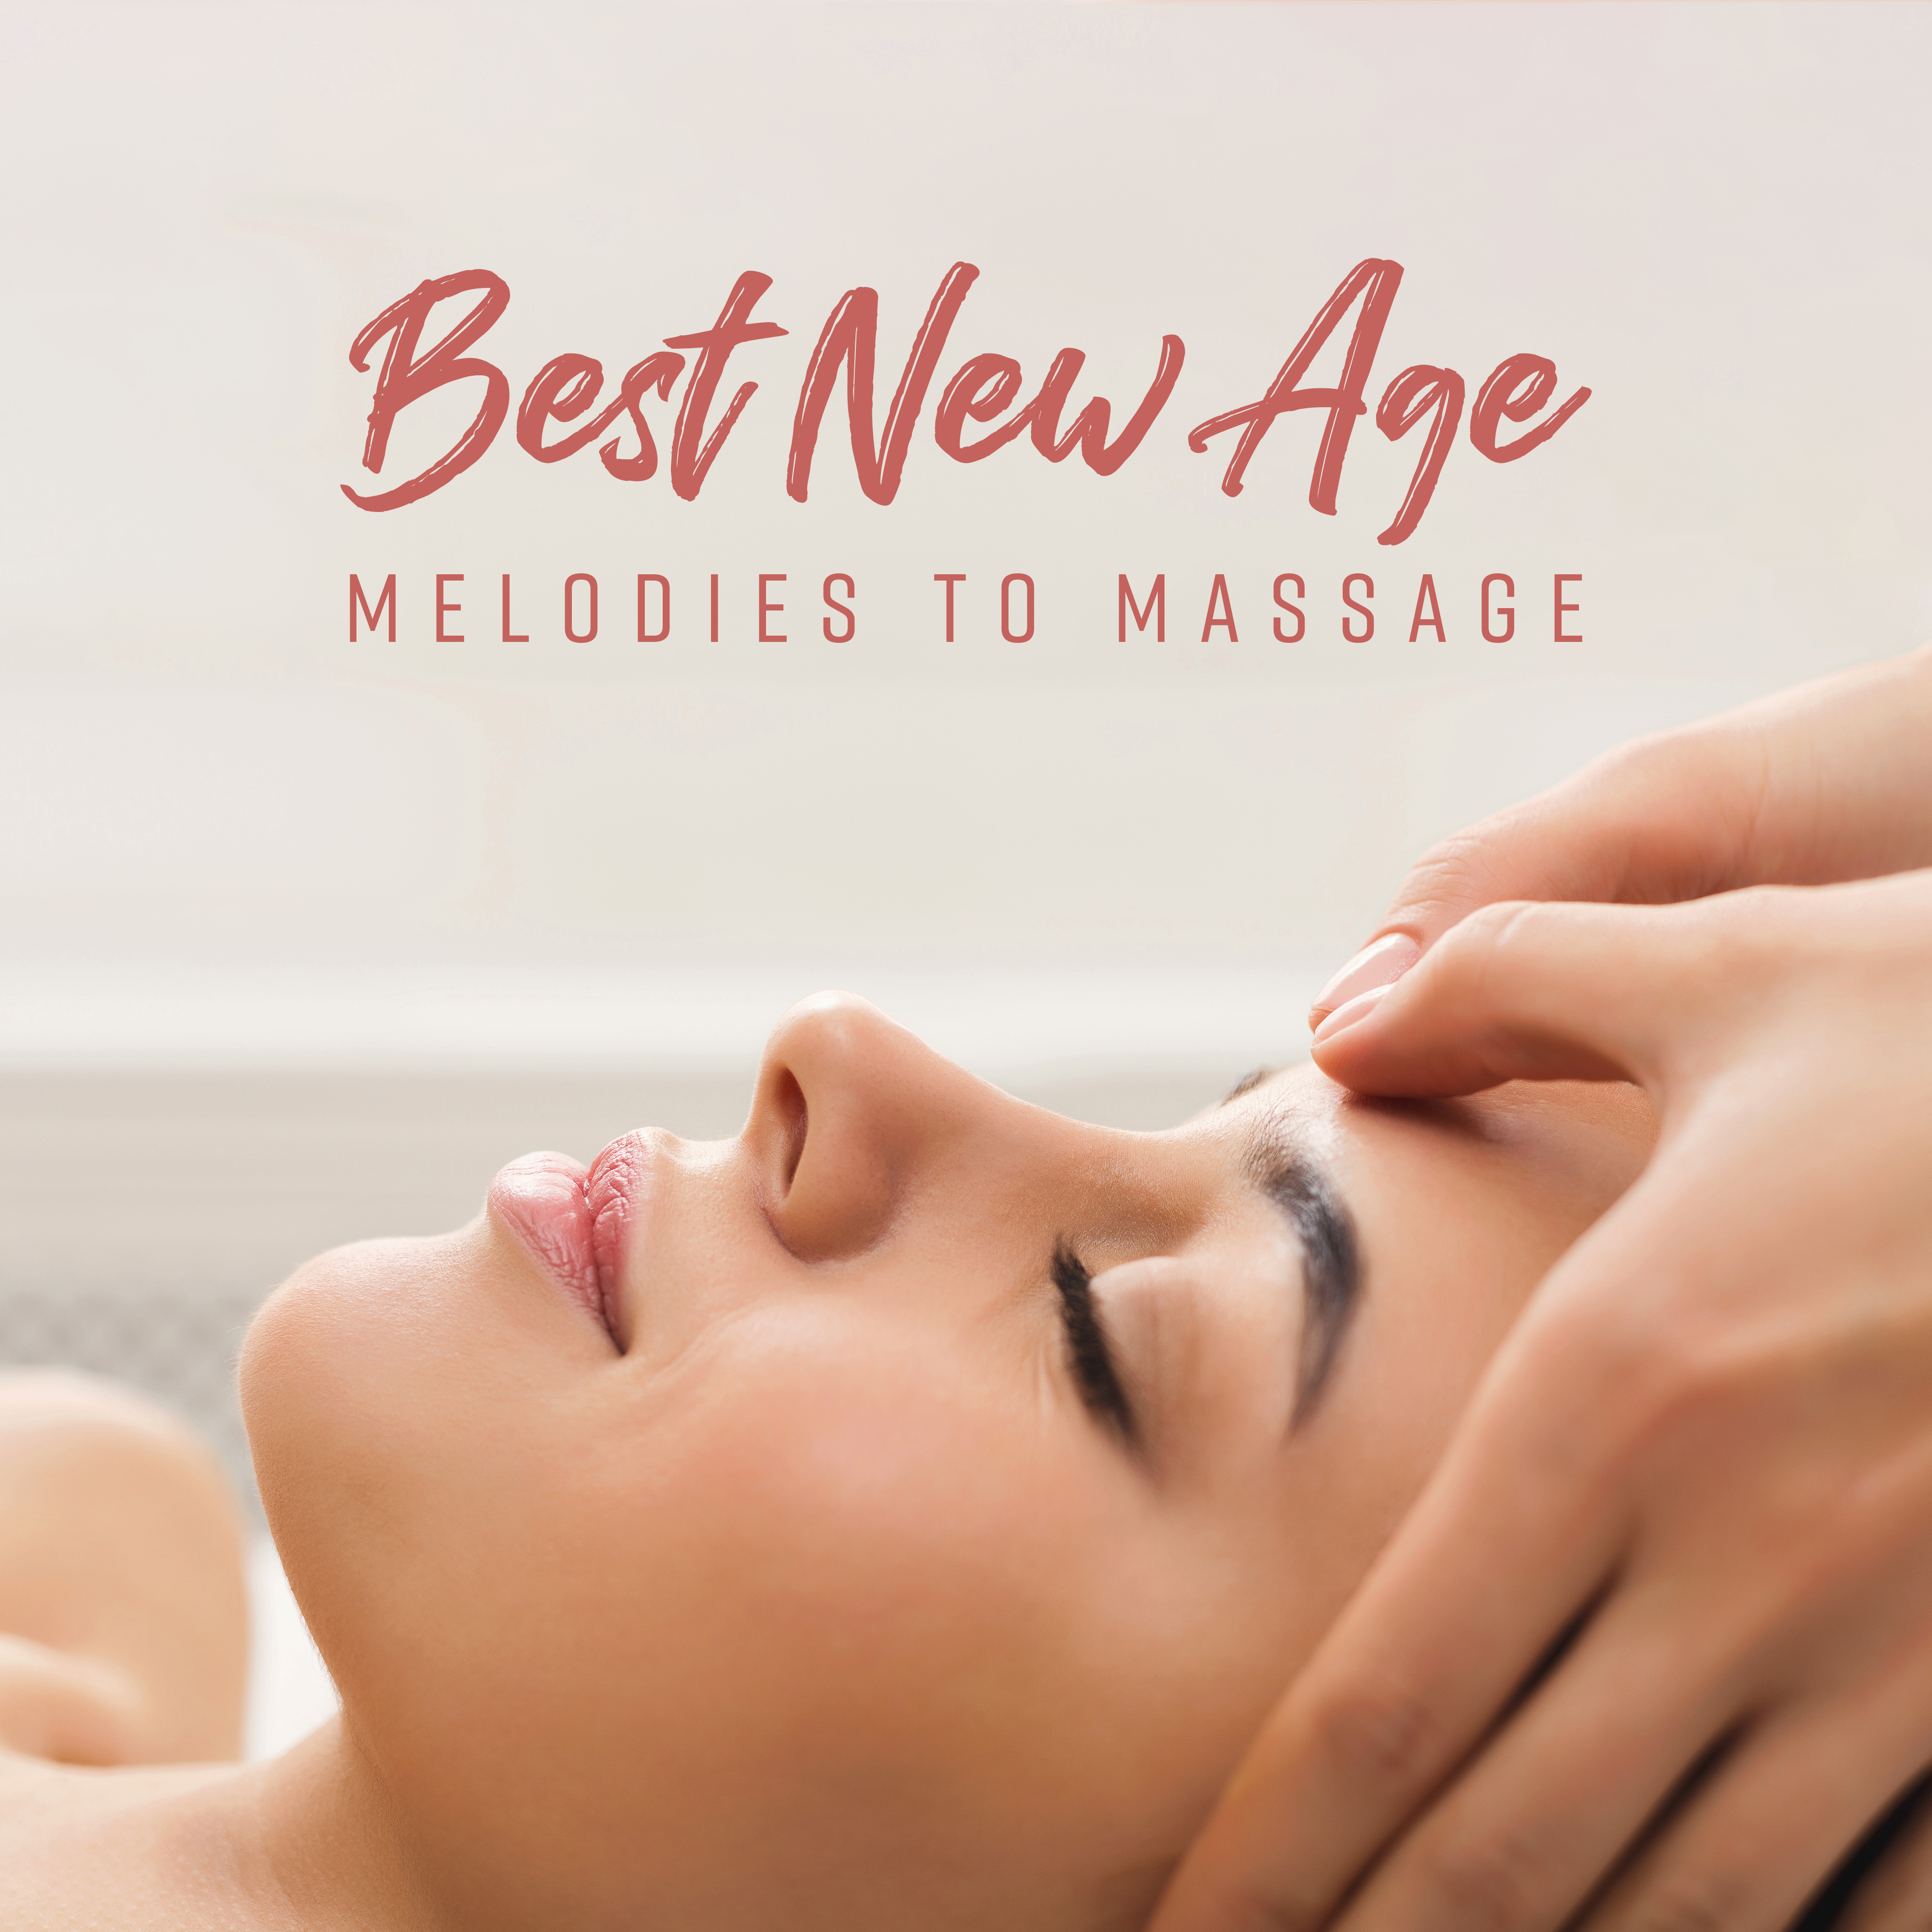 Best New Age Melodies to Massage